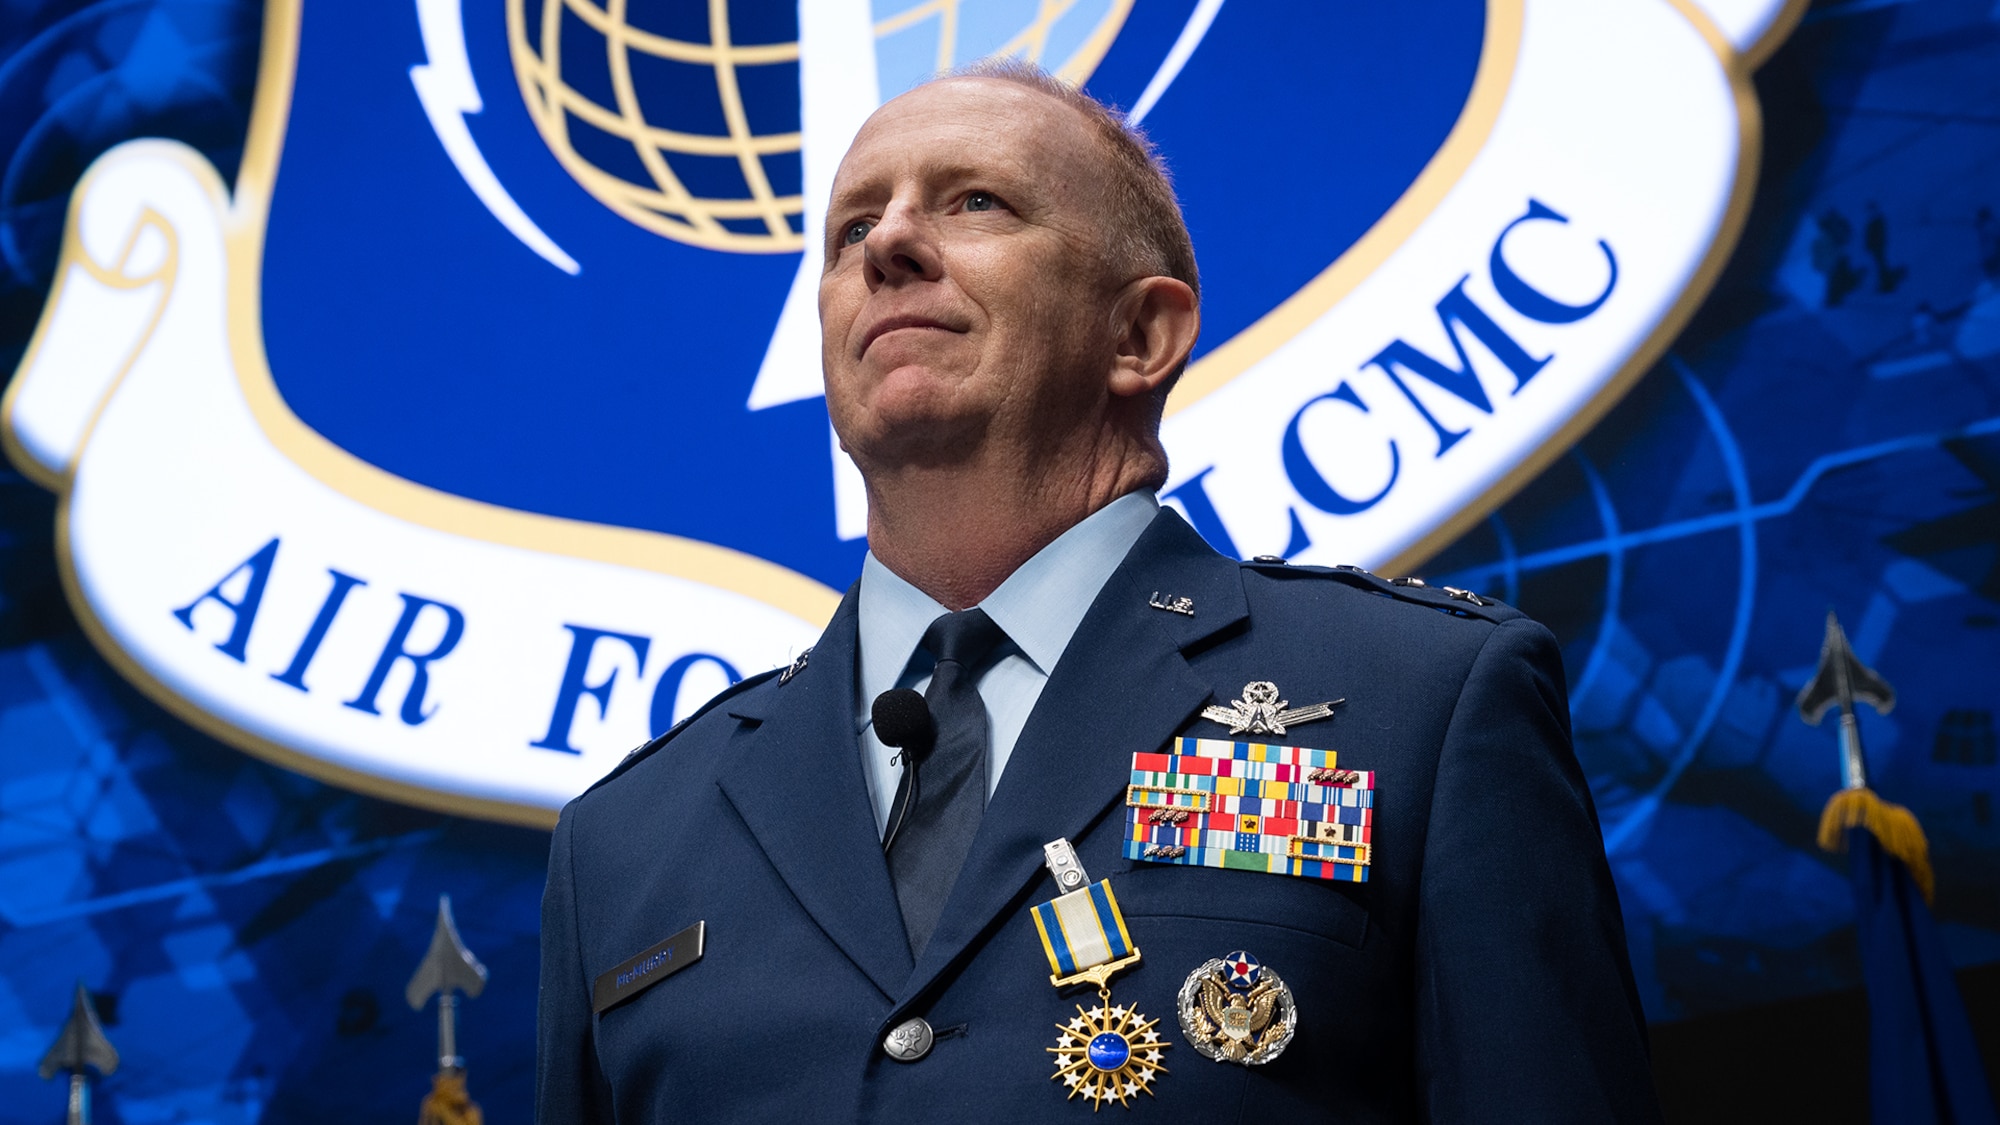 Lt. Gen. McMurry Retirement Ceremony